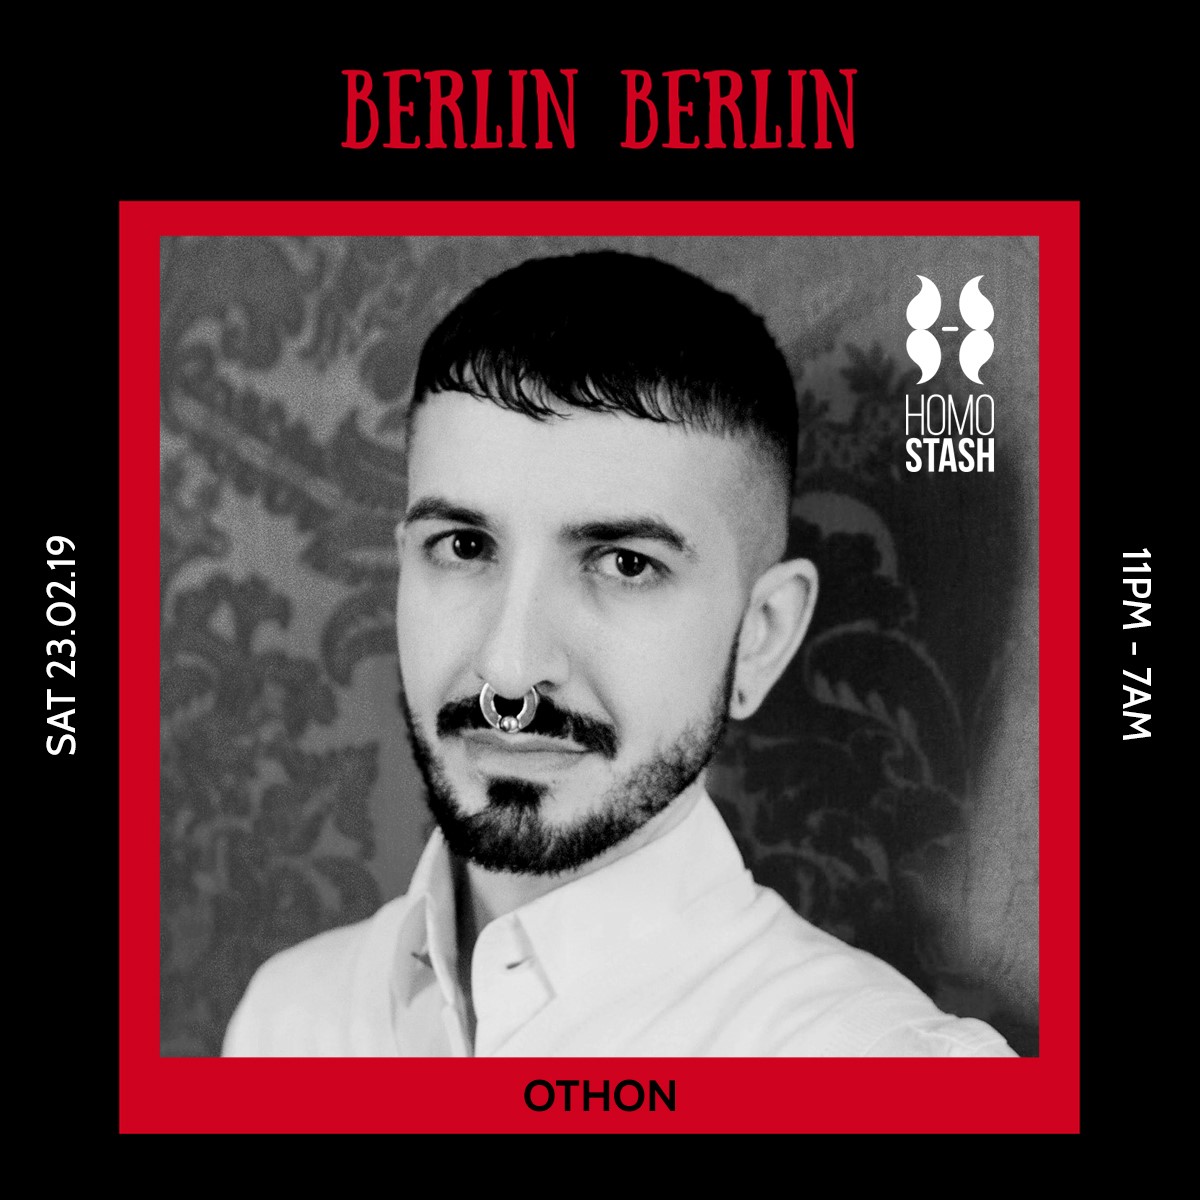 DJ set for Berlin Berlin/Homostash at The Egg, Sat 23 February